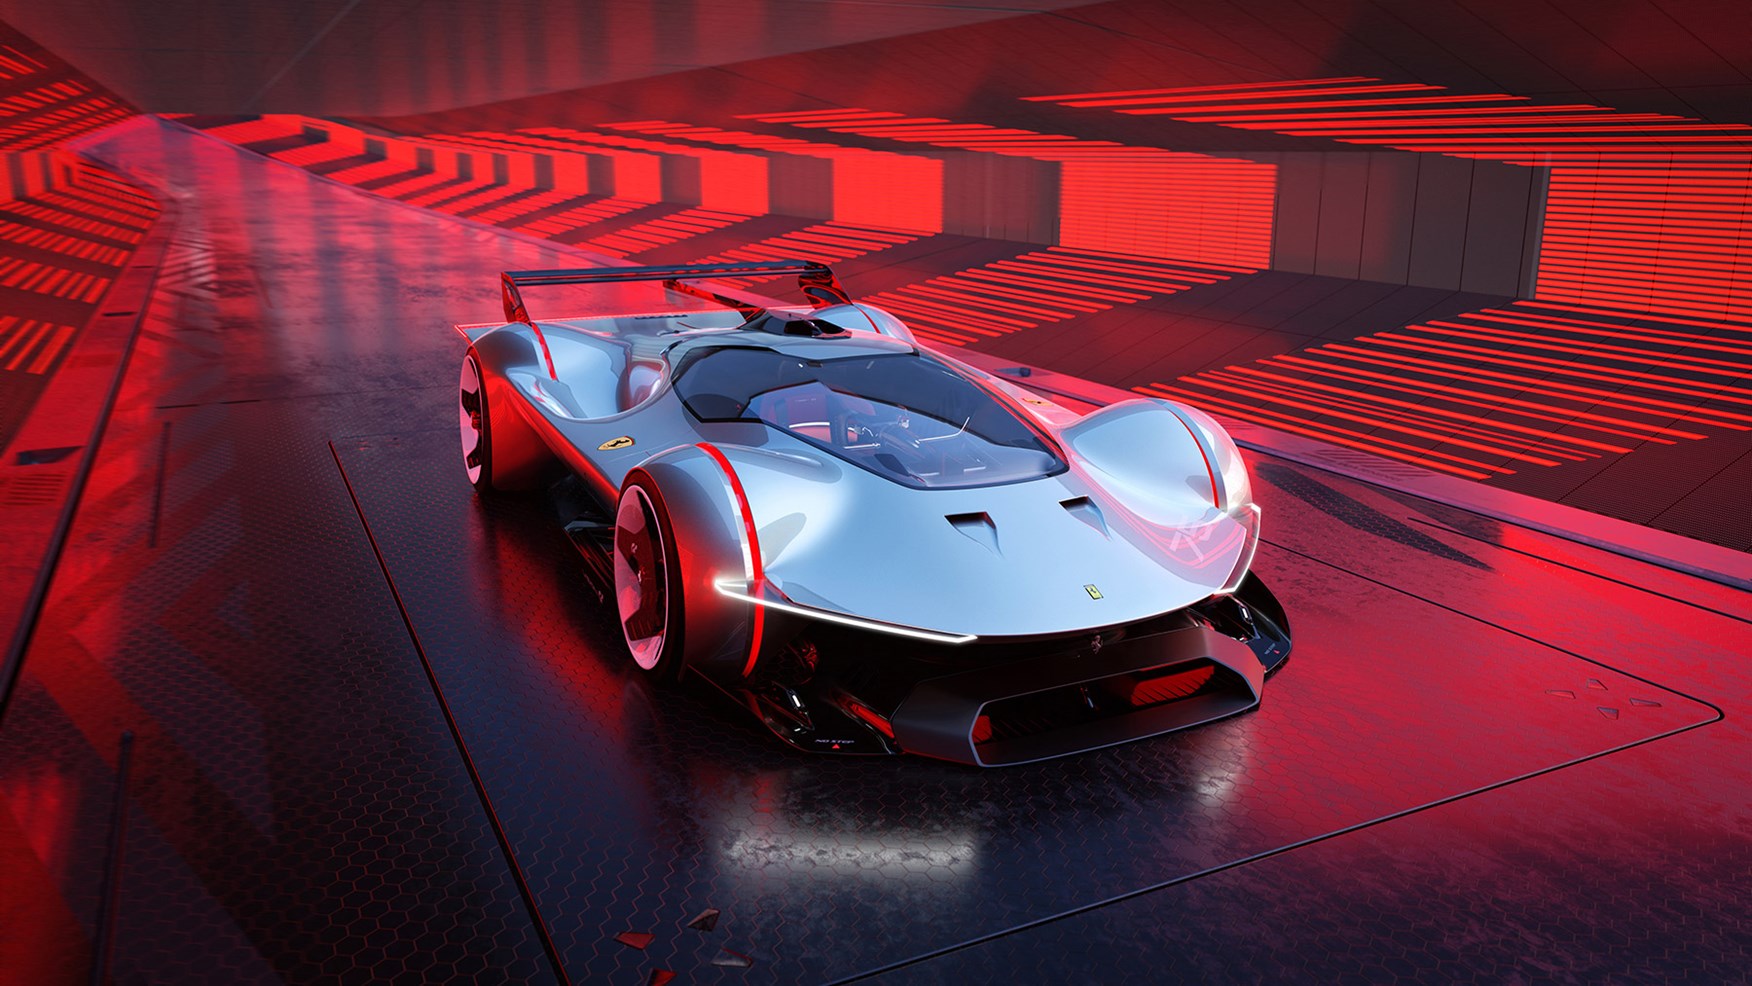 Gran Turismo 7 November Update: New Cars, Track & More